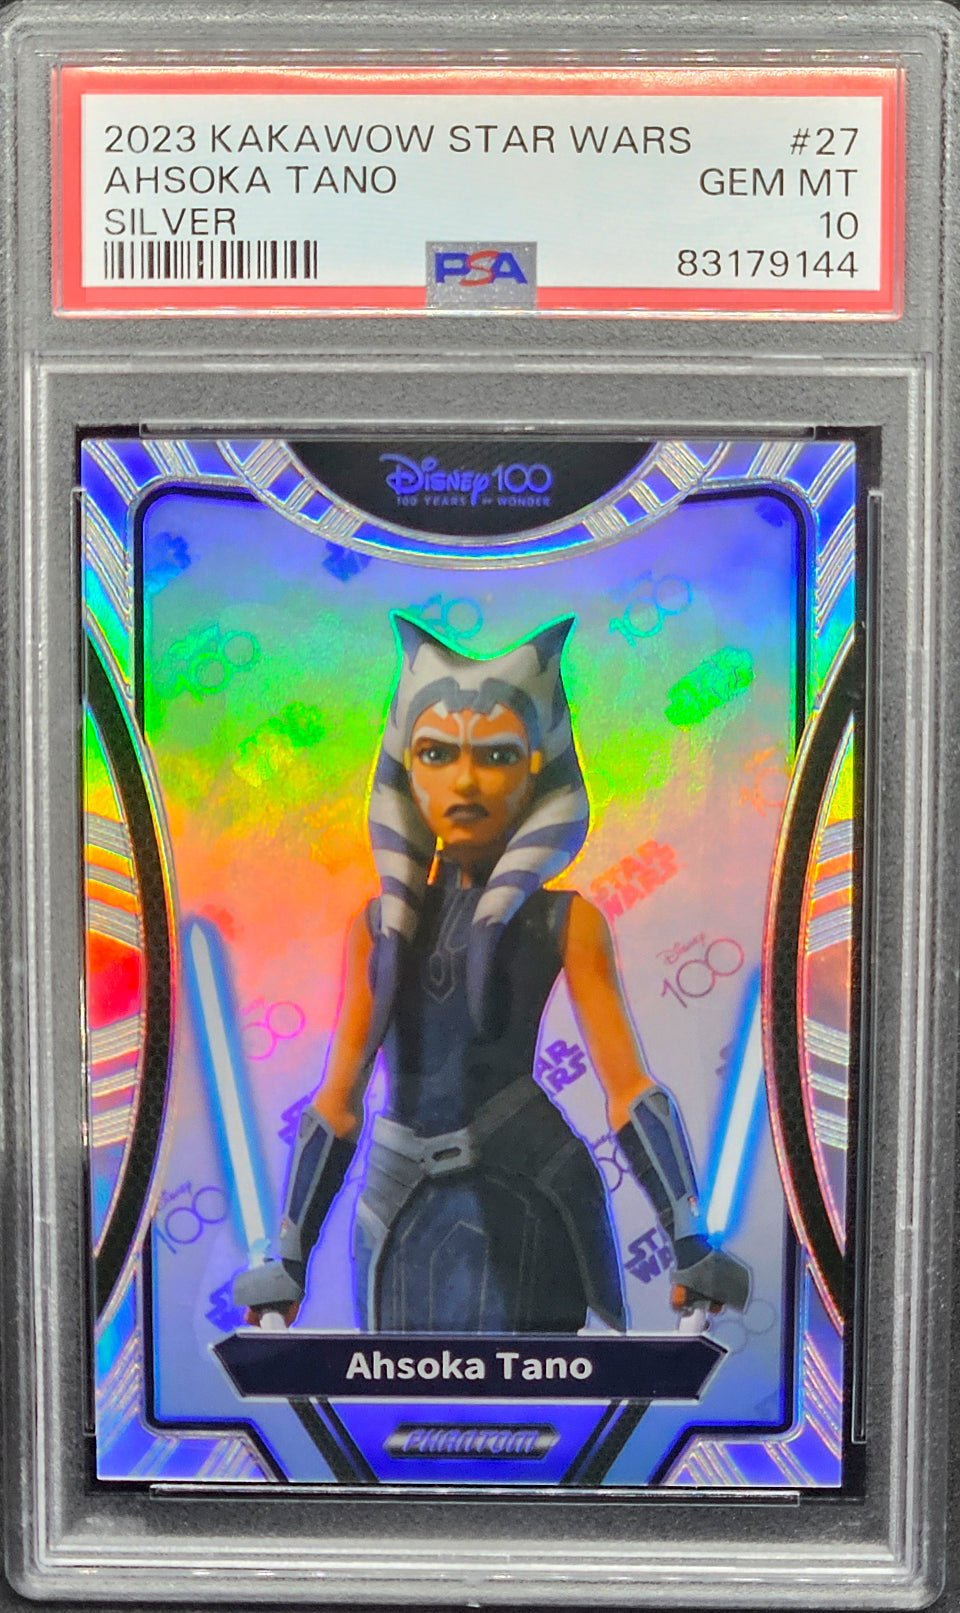 AHSOKA TANO PSA 10 2023 Kakawow Disney 100 Star Wars Silver #PS-I-27 Star Wars Graded Cards Parallel - Hobby Gems